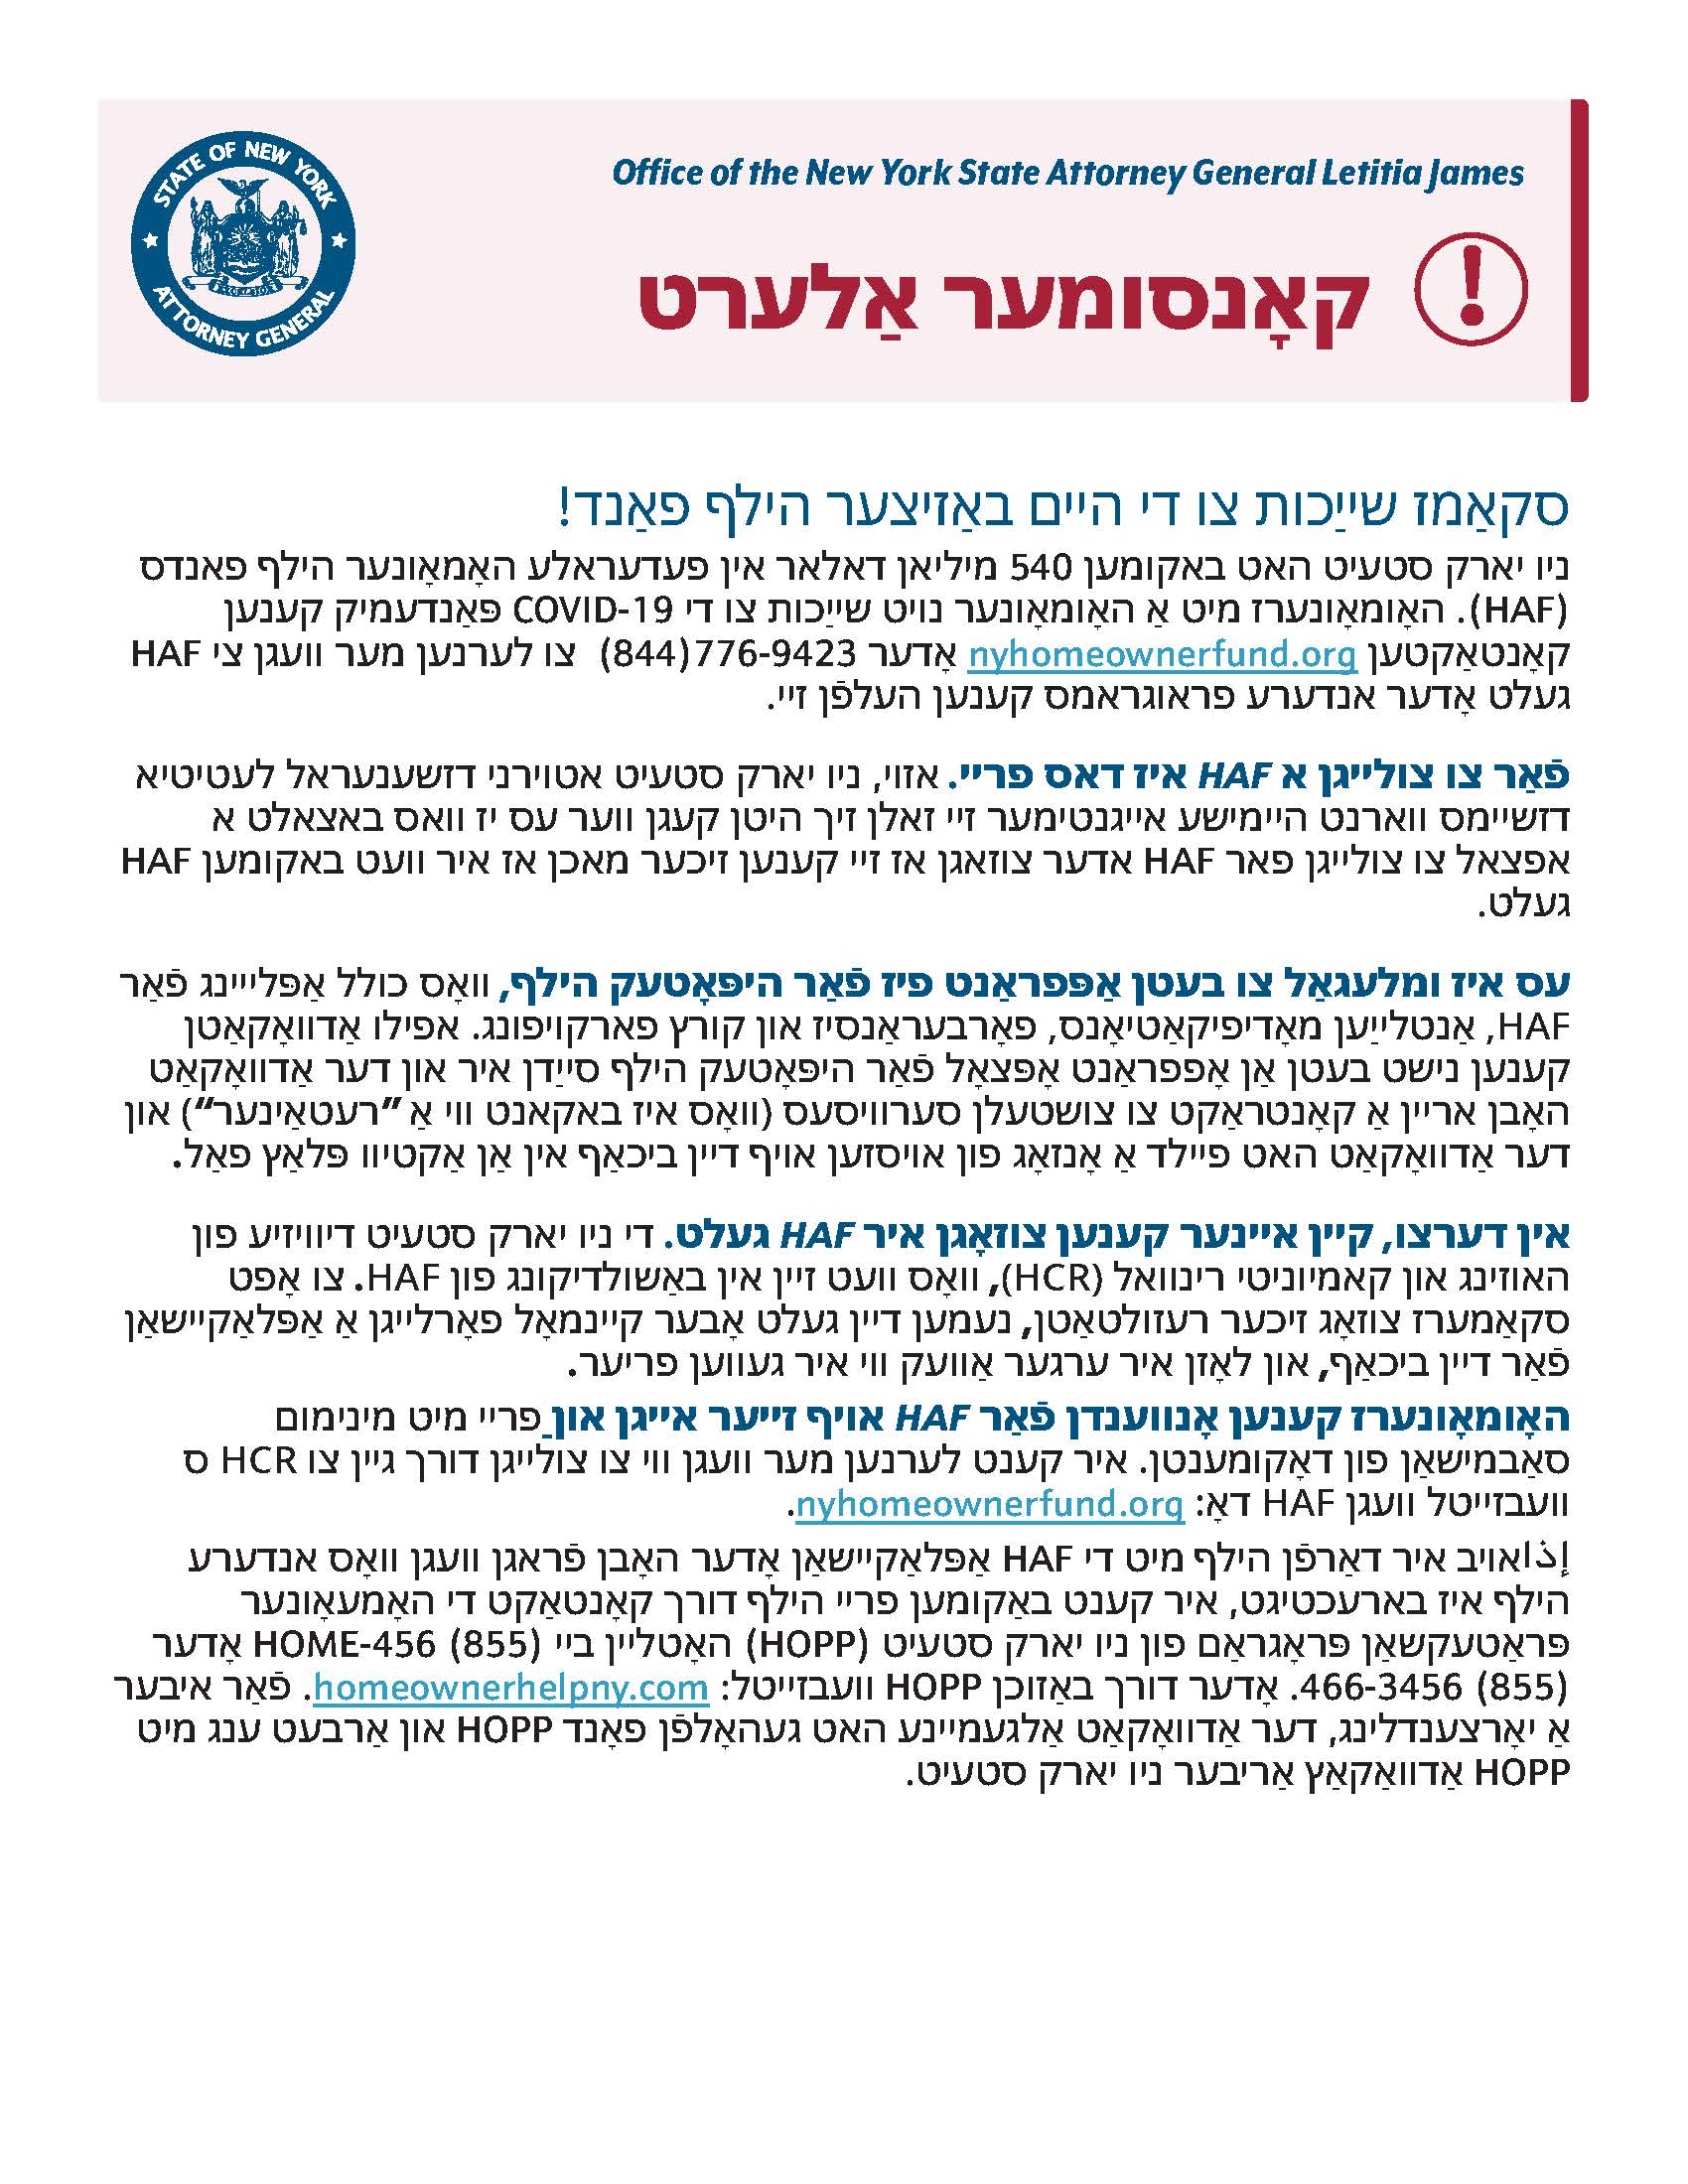 page 1 yiddish